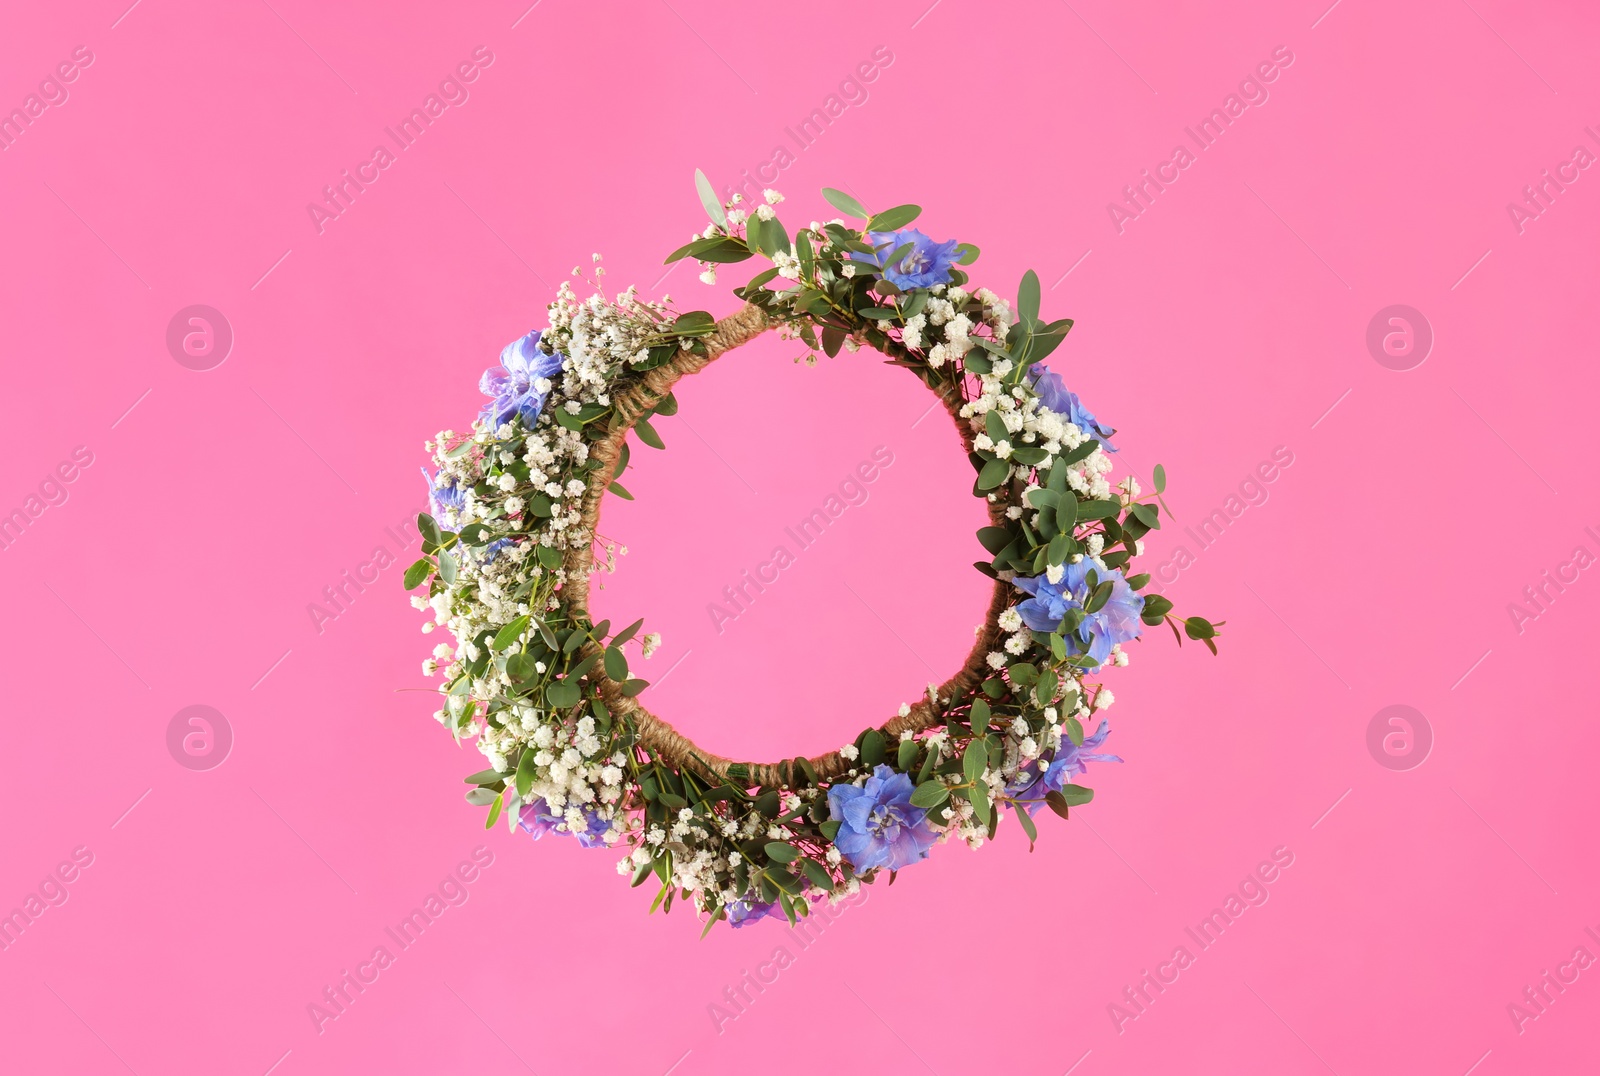 Photo of Beautiful handmade flower wreath on pink background